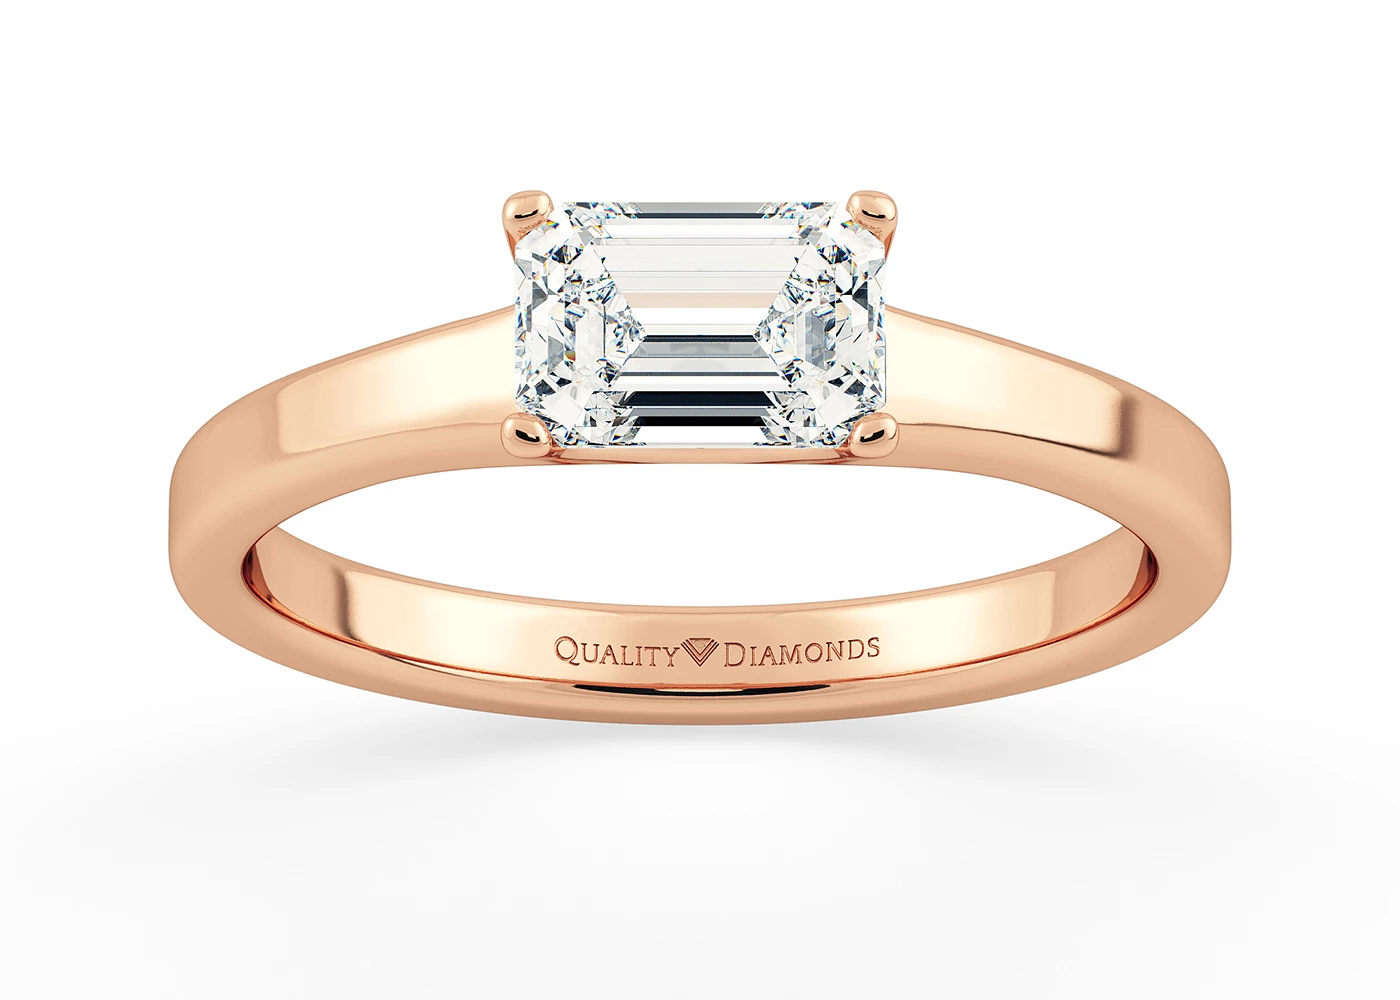 Emerald Felicita Diamond Ring in 9K Rose Gold